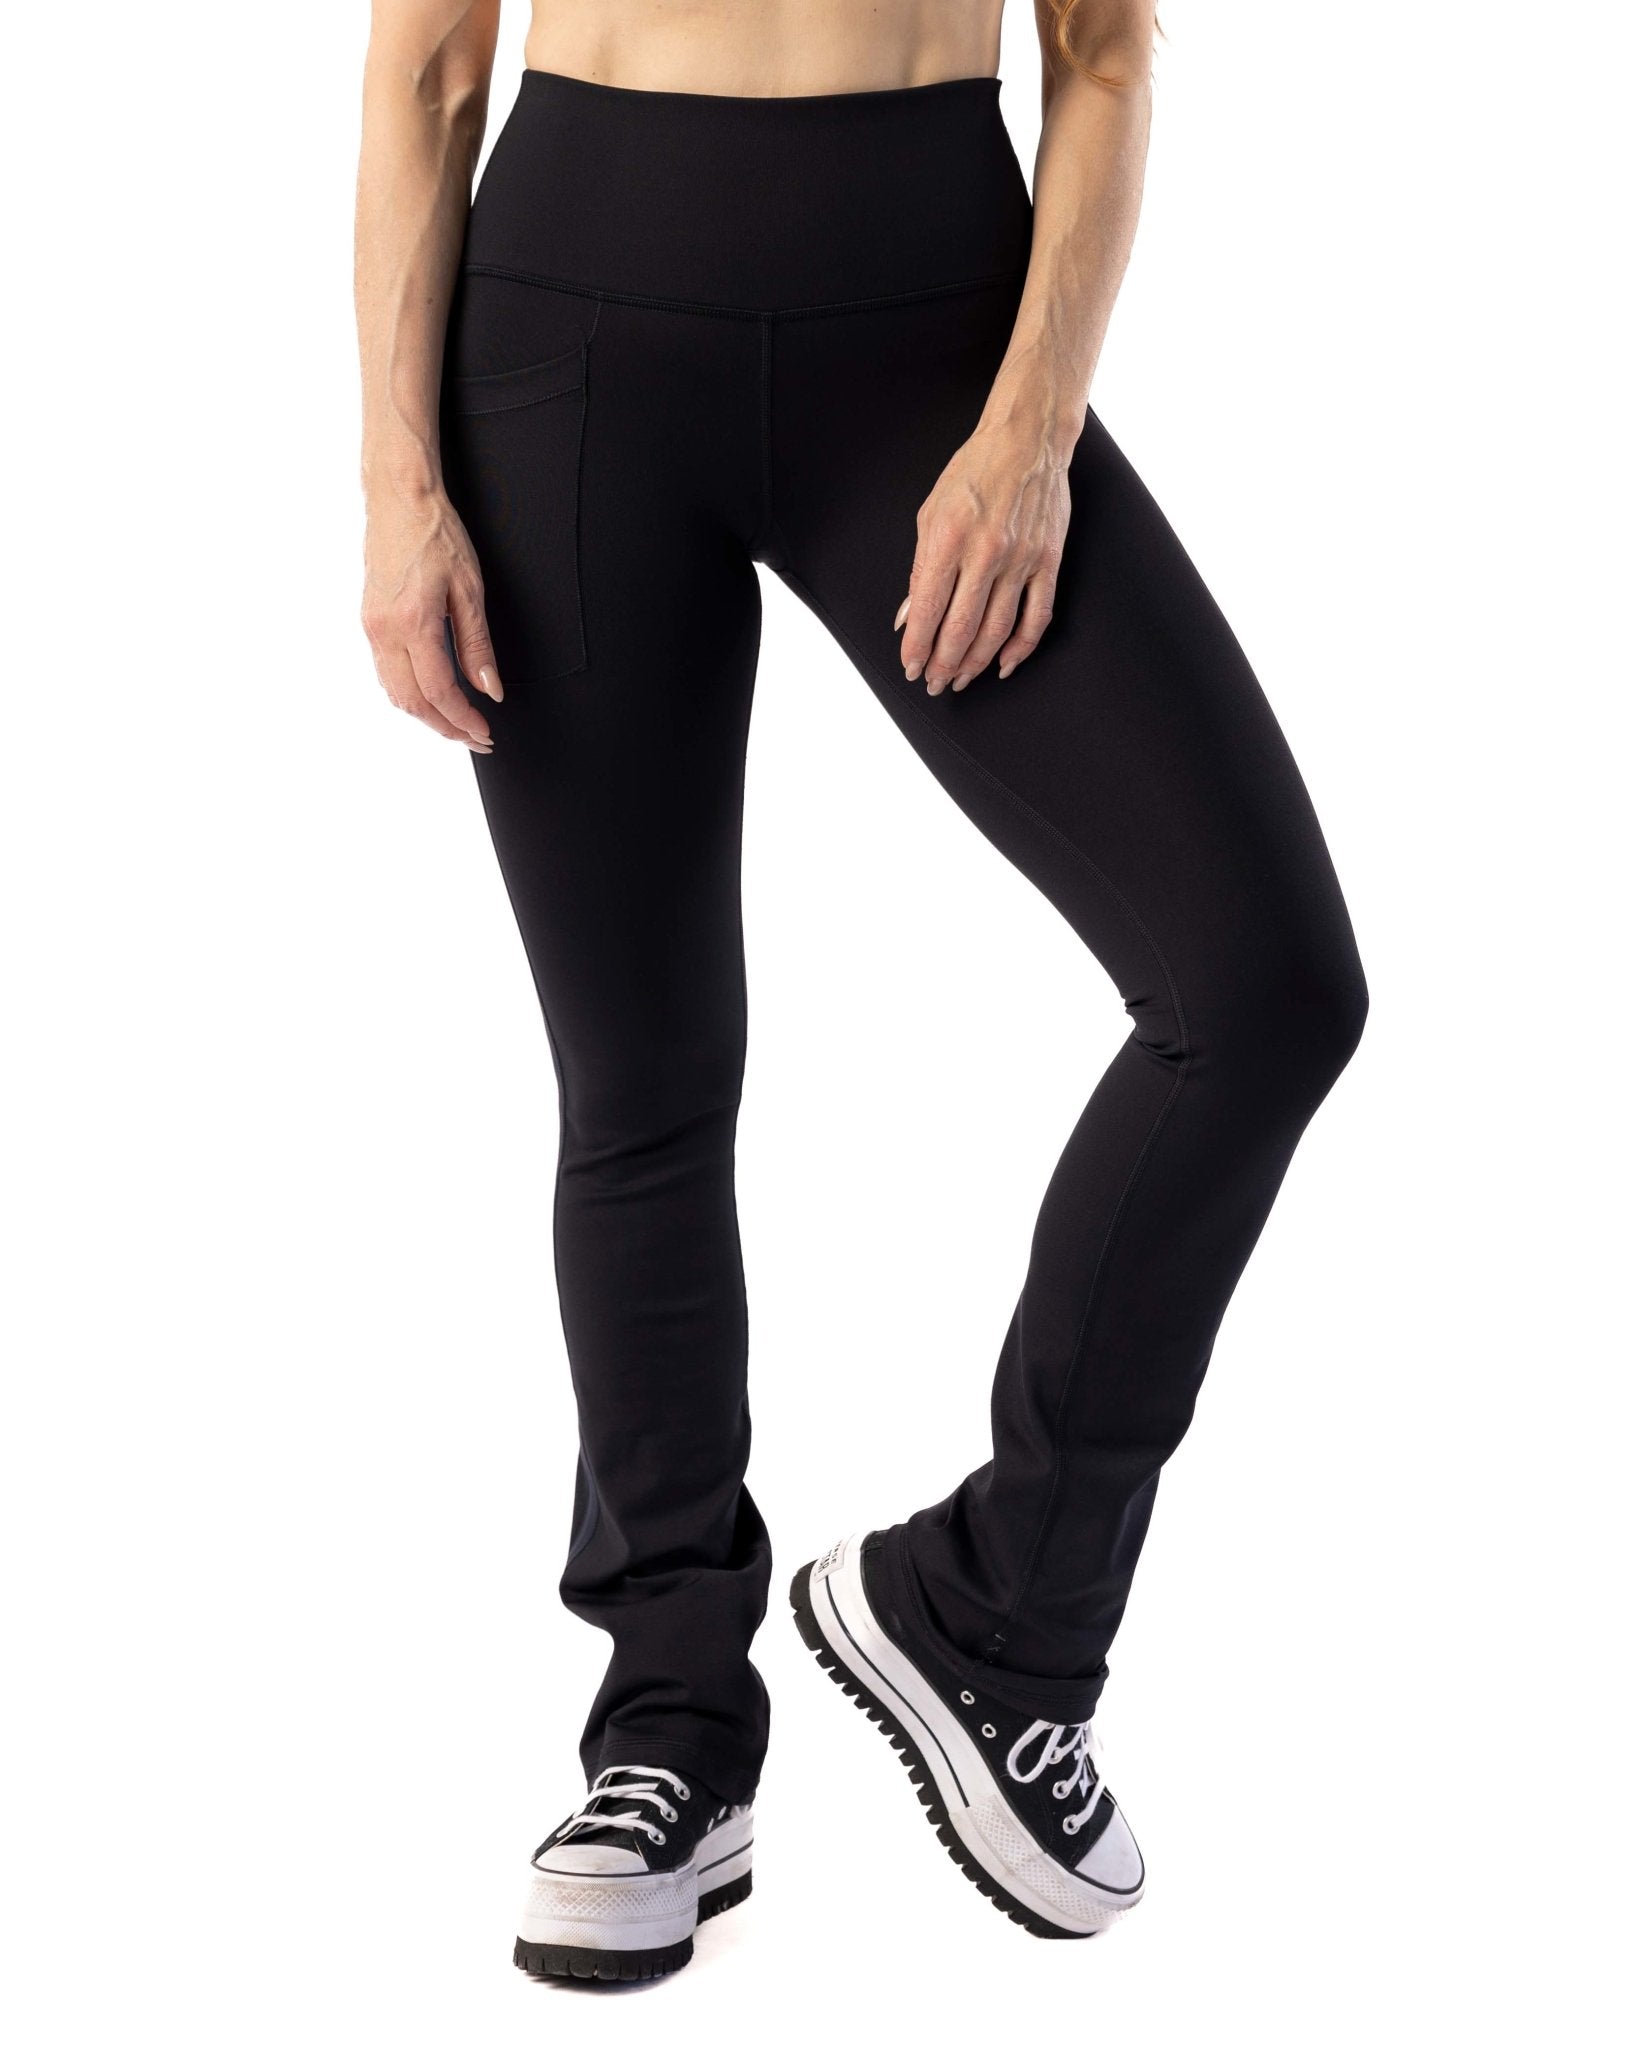 Lululemon Size 4 Better Together Pant Black Skinny Jeans Stretch Fabric